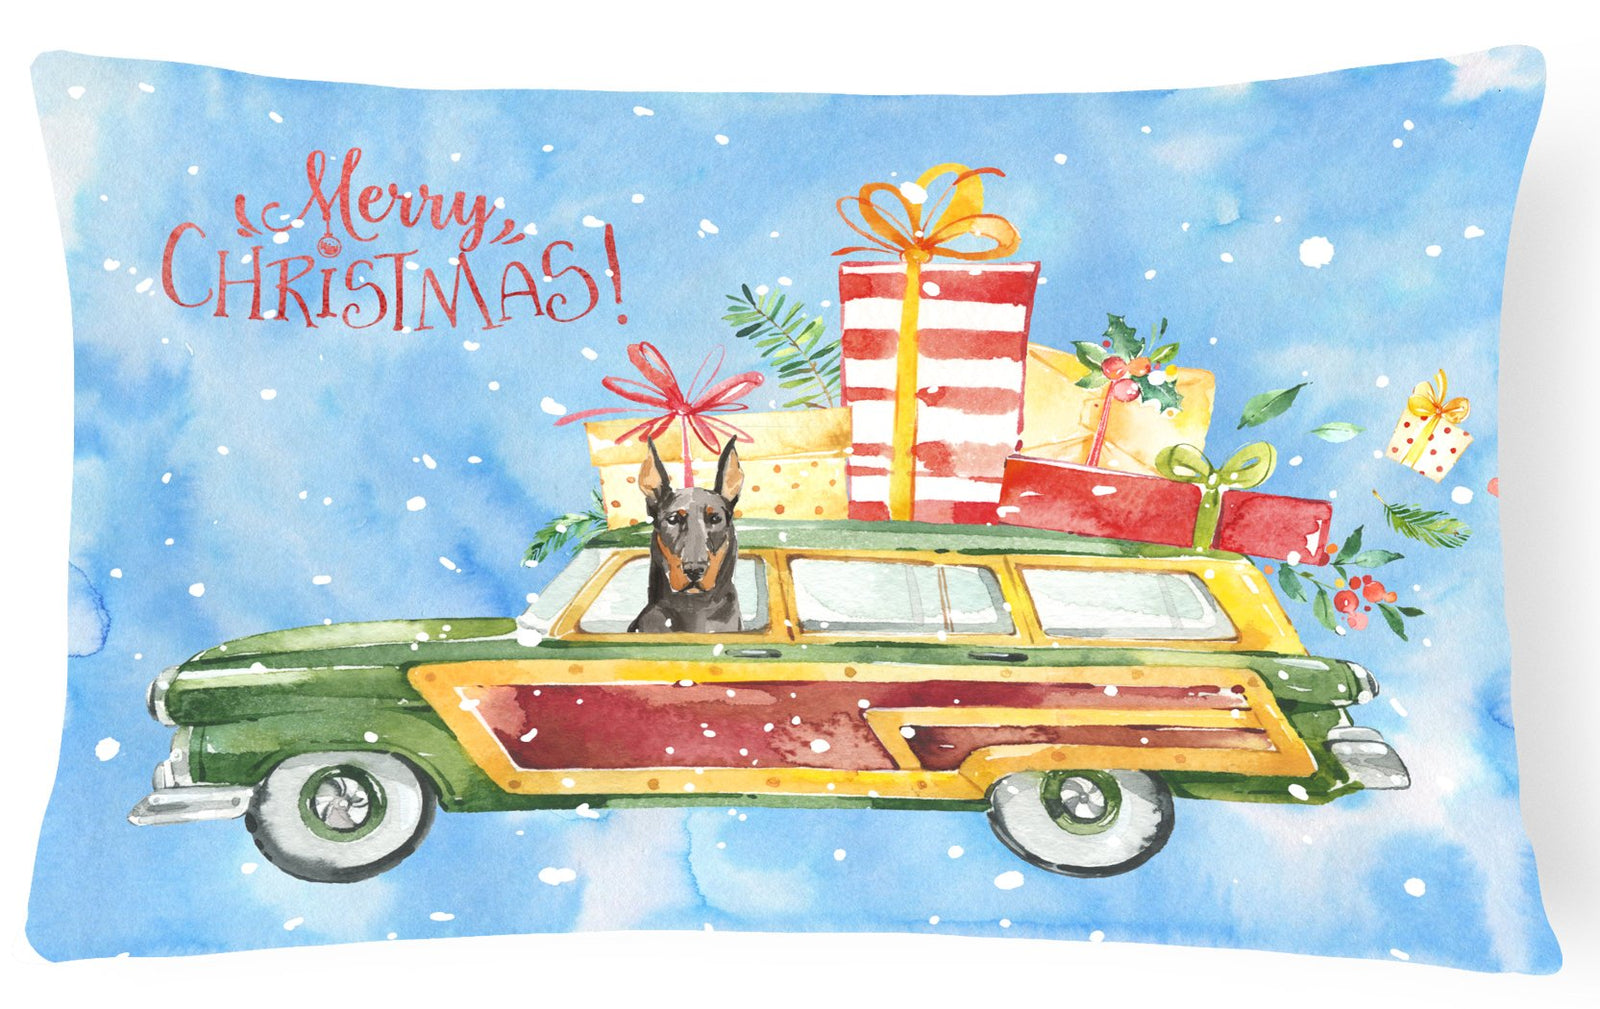 Merry Christmas Doberman Pinscher Canvas Fabric Decorative Pillow CK2404PW1216 by Caroline's Treasures